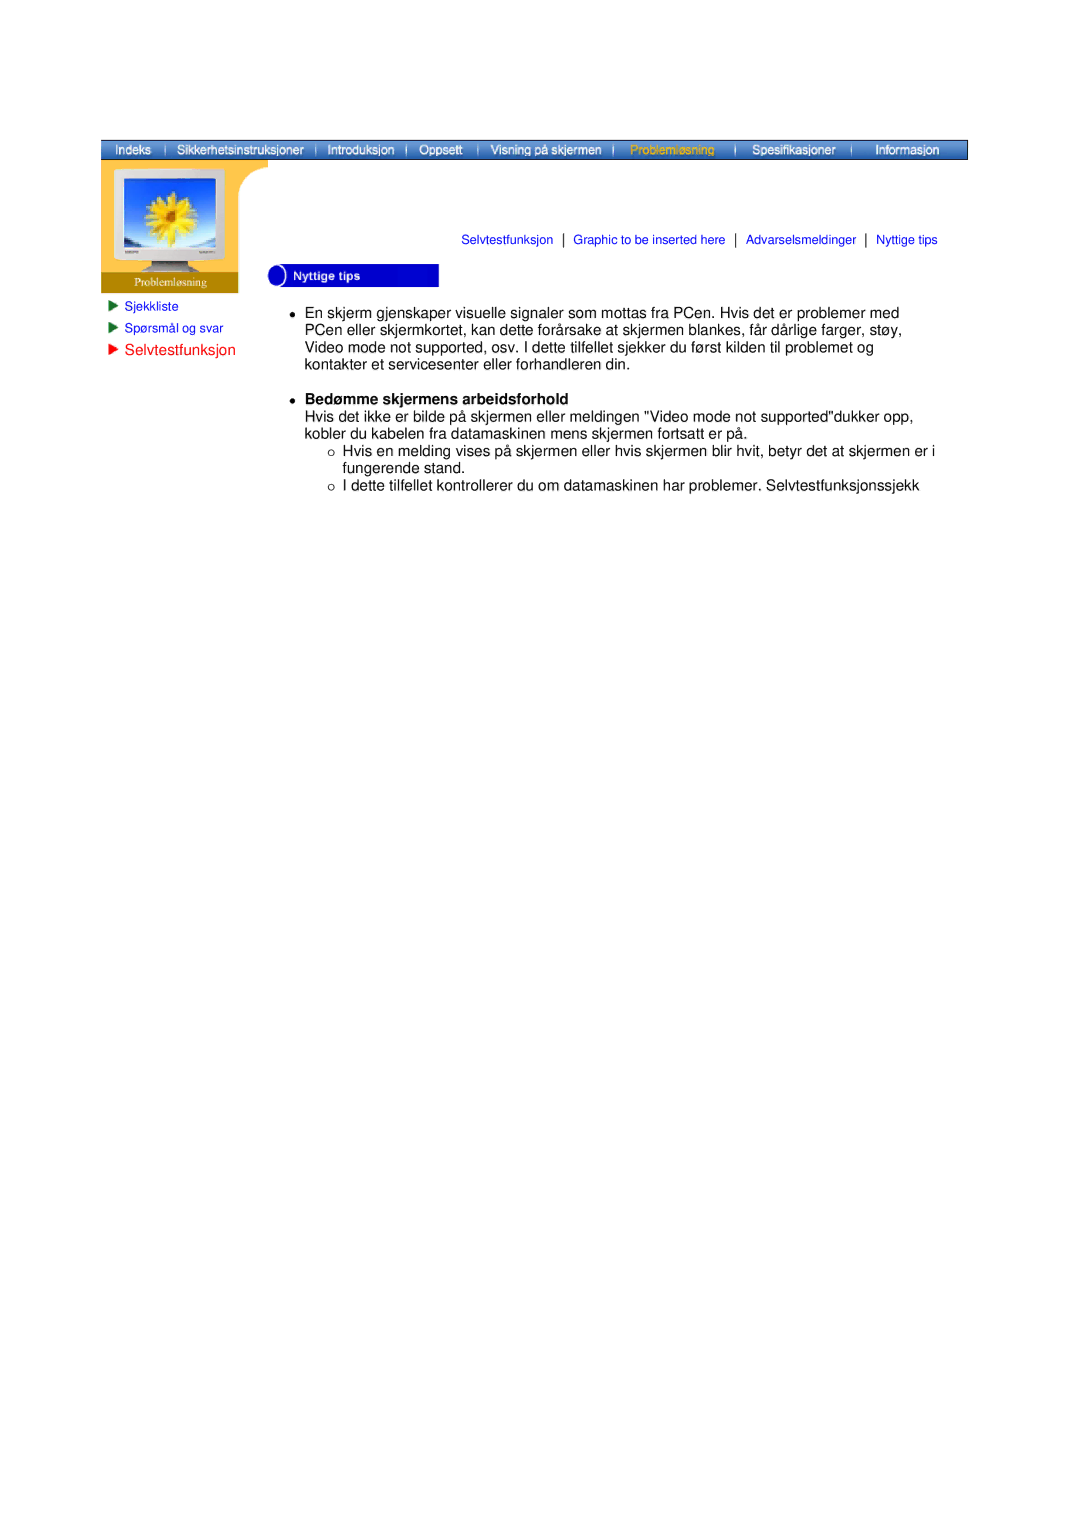 Samsung NB17BSHSQ/EDC, NB17BSPSQ/EDC manual Bedømme skjermens arbeidsforhold 